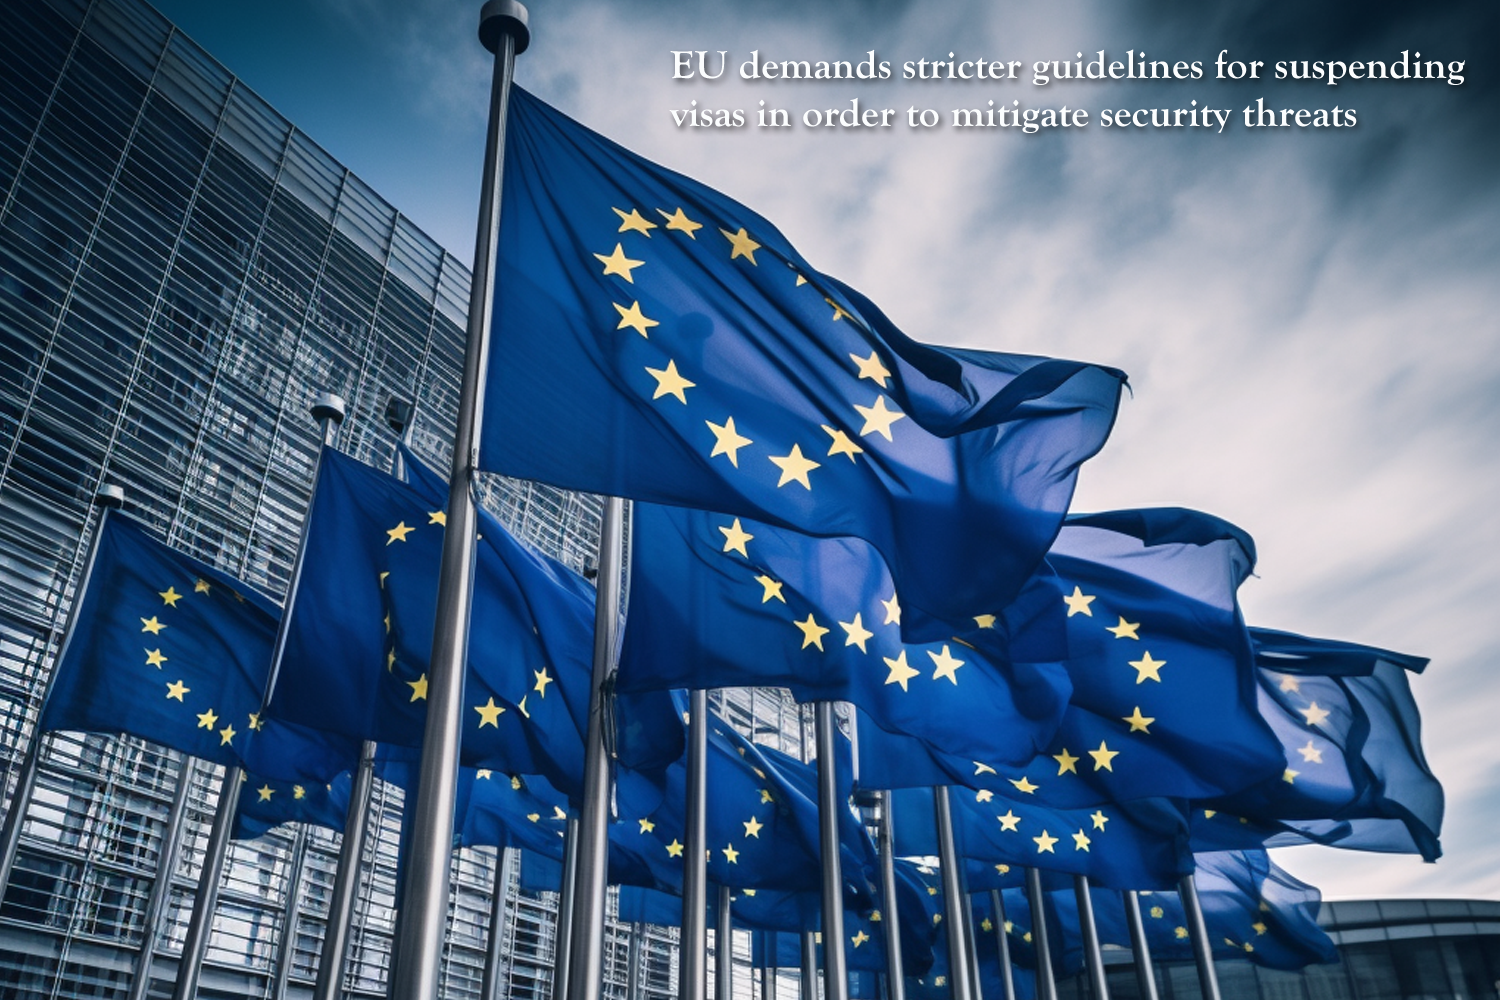 EU demands stricter guidelines for suspending visas in order to mitigate security threats.